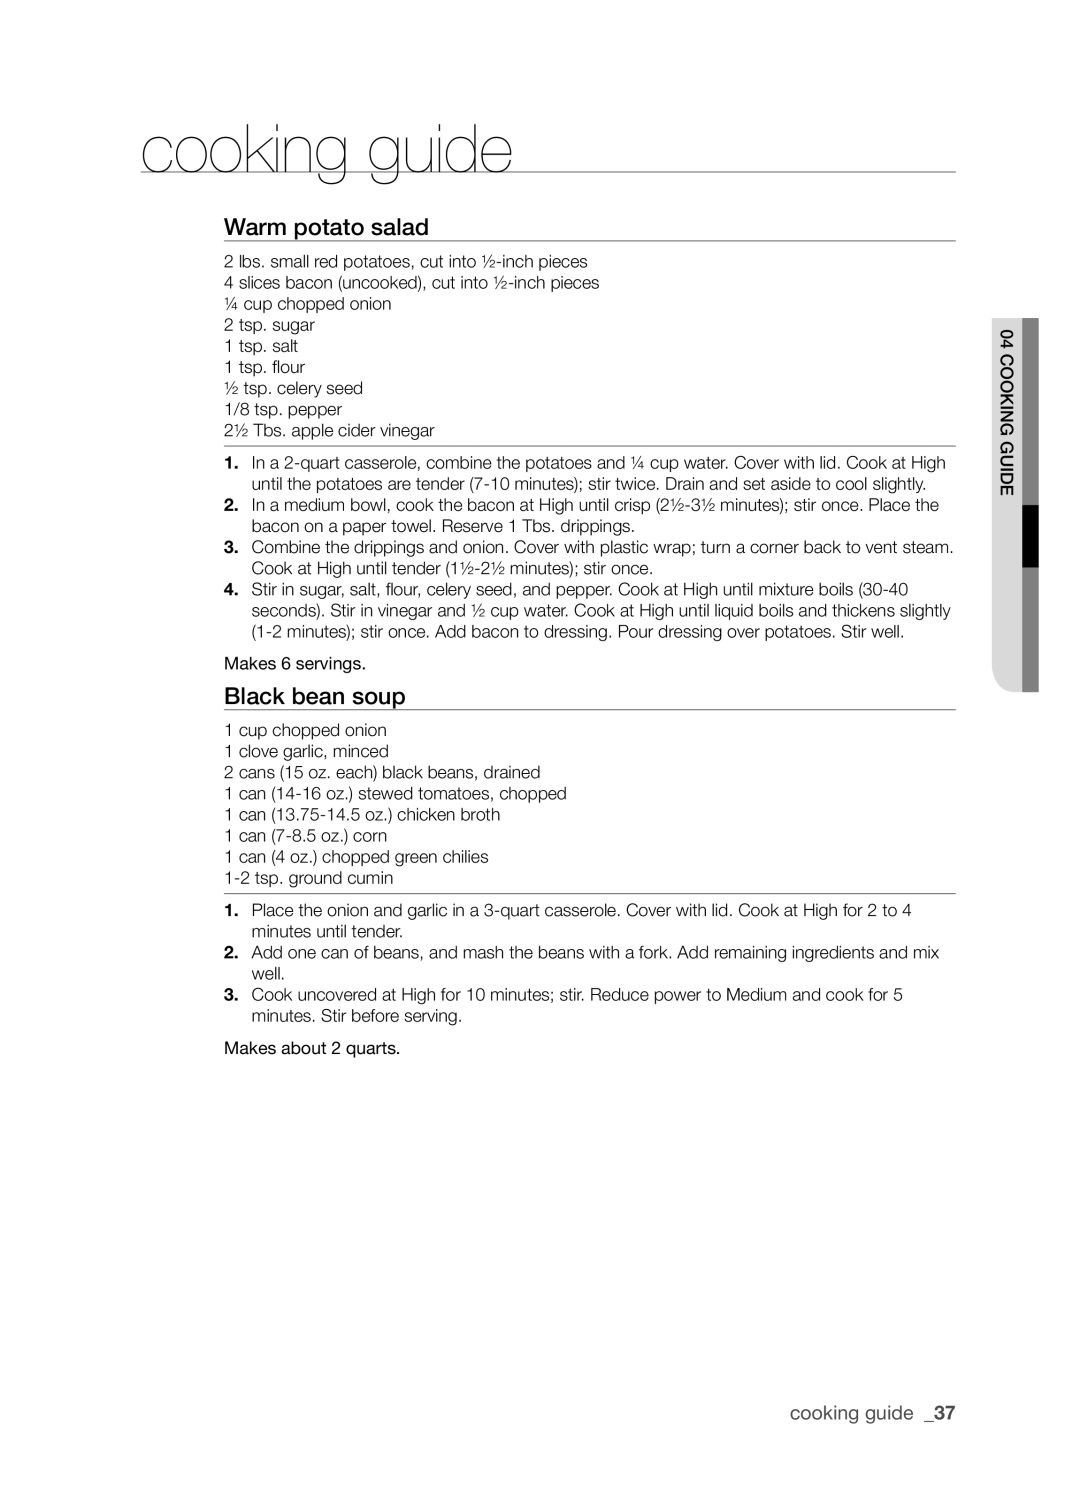 Samsung SMH9207 user manual Warm potato salad, Black bean soup, cooking guide 